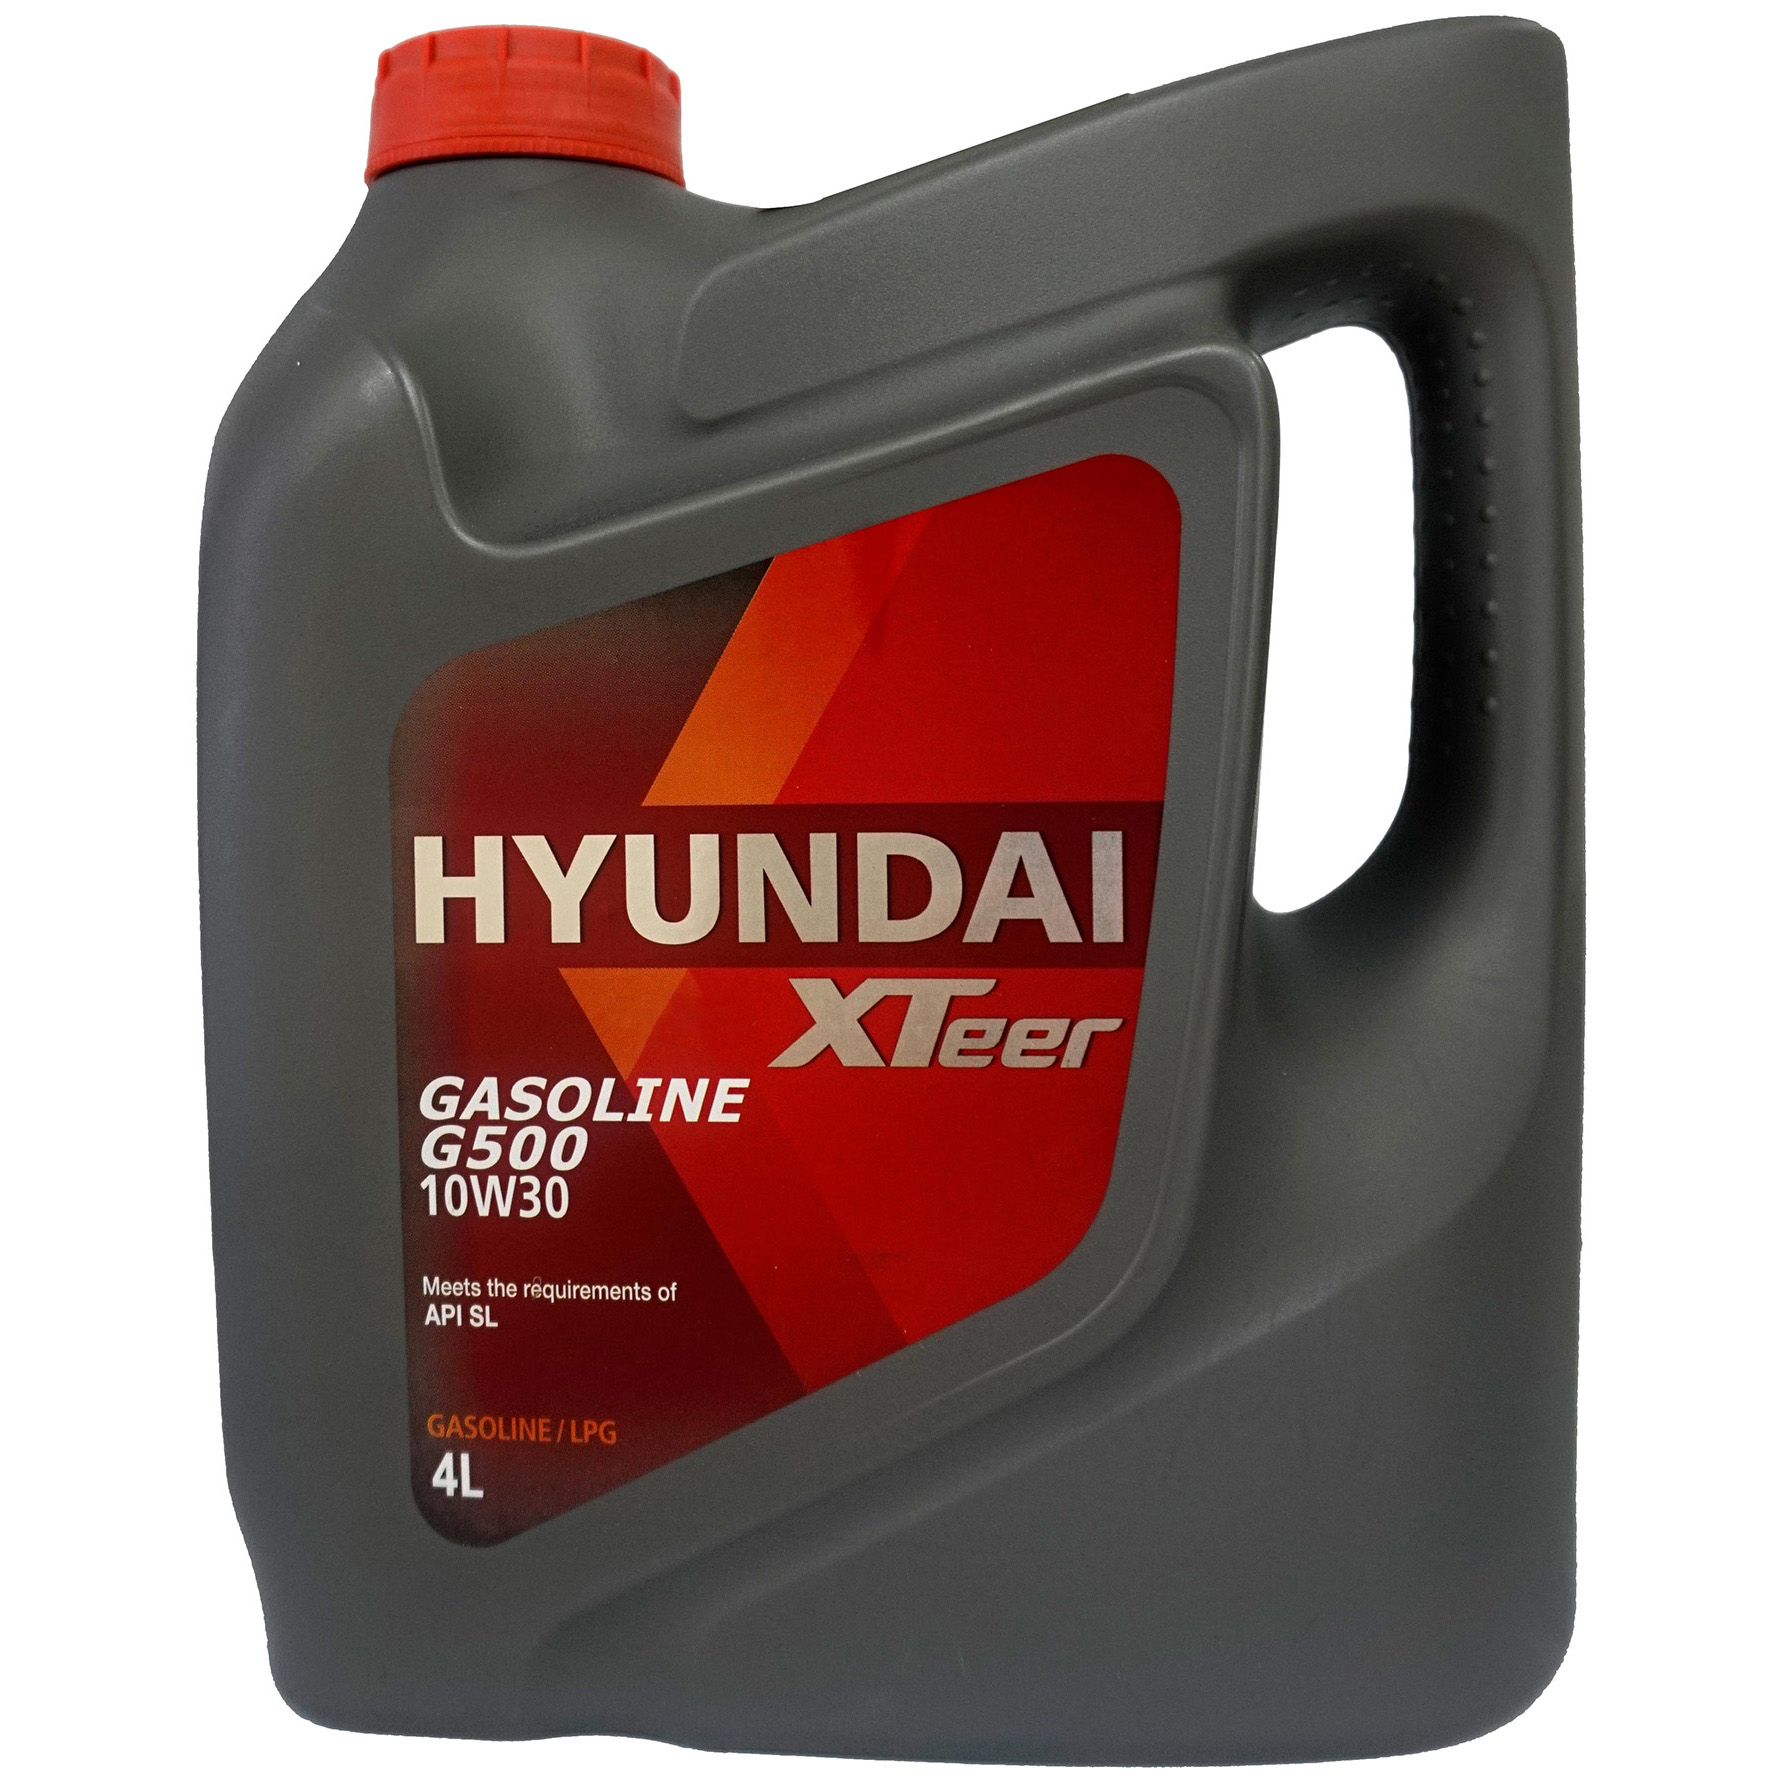 Моторное масло HYUNDAI Xteer Gasoline G500 Api Sl Synthetic 10W30 4л